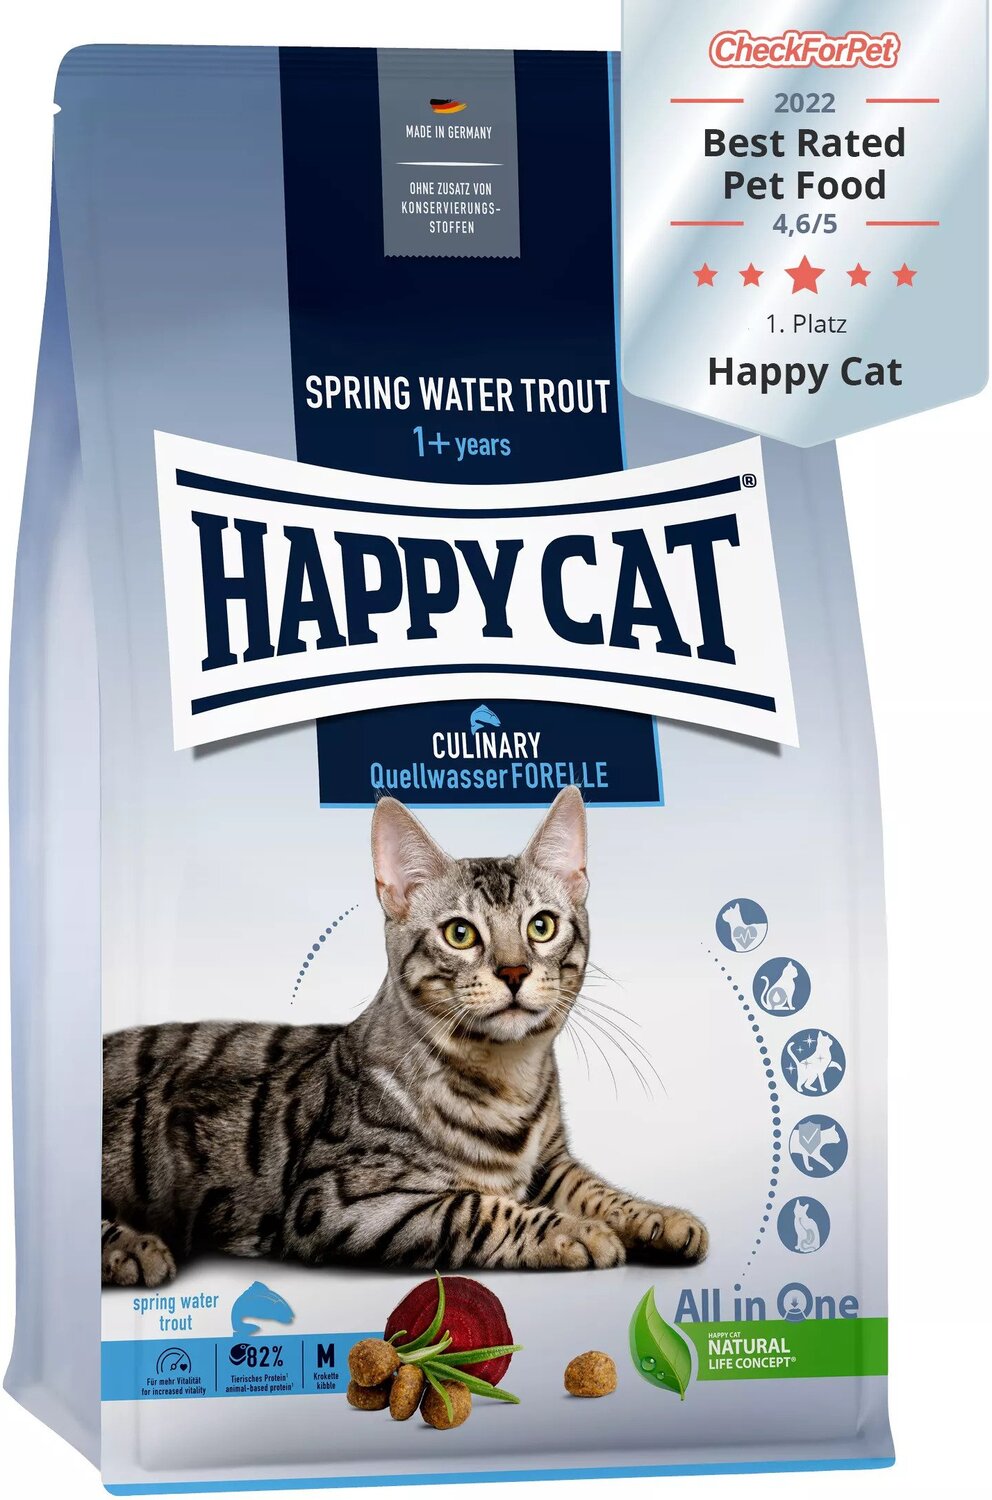 Happy Cat Culinary Quellwasser-Forelle